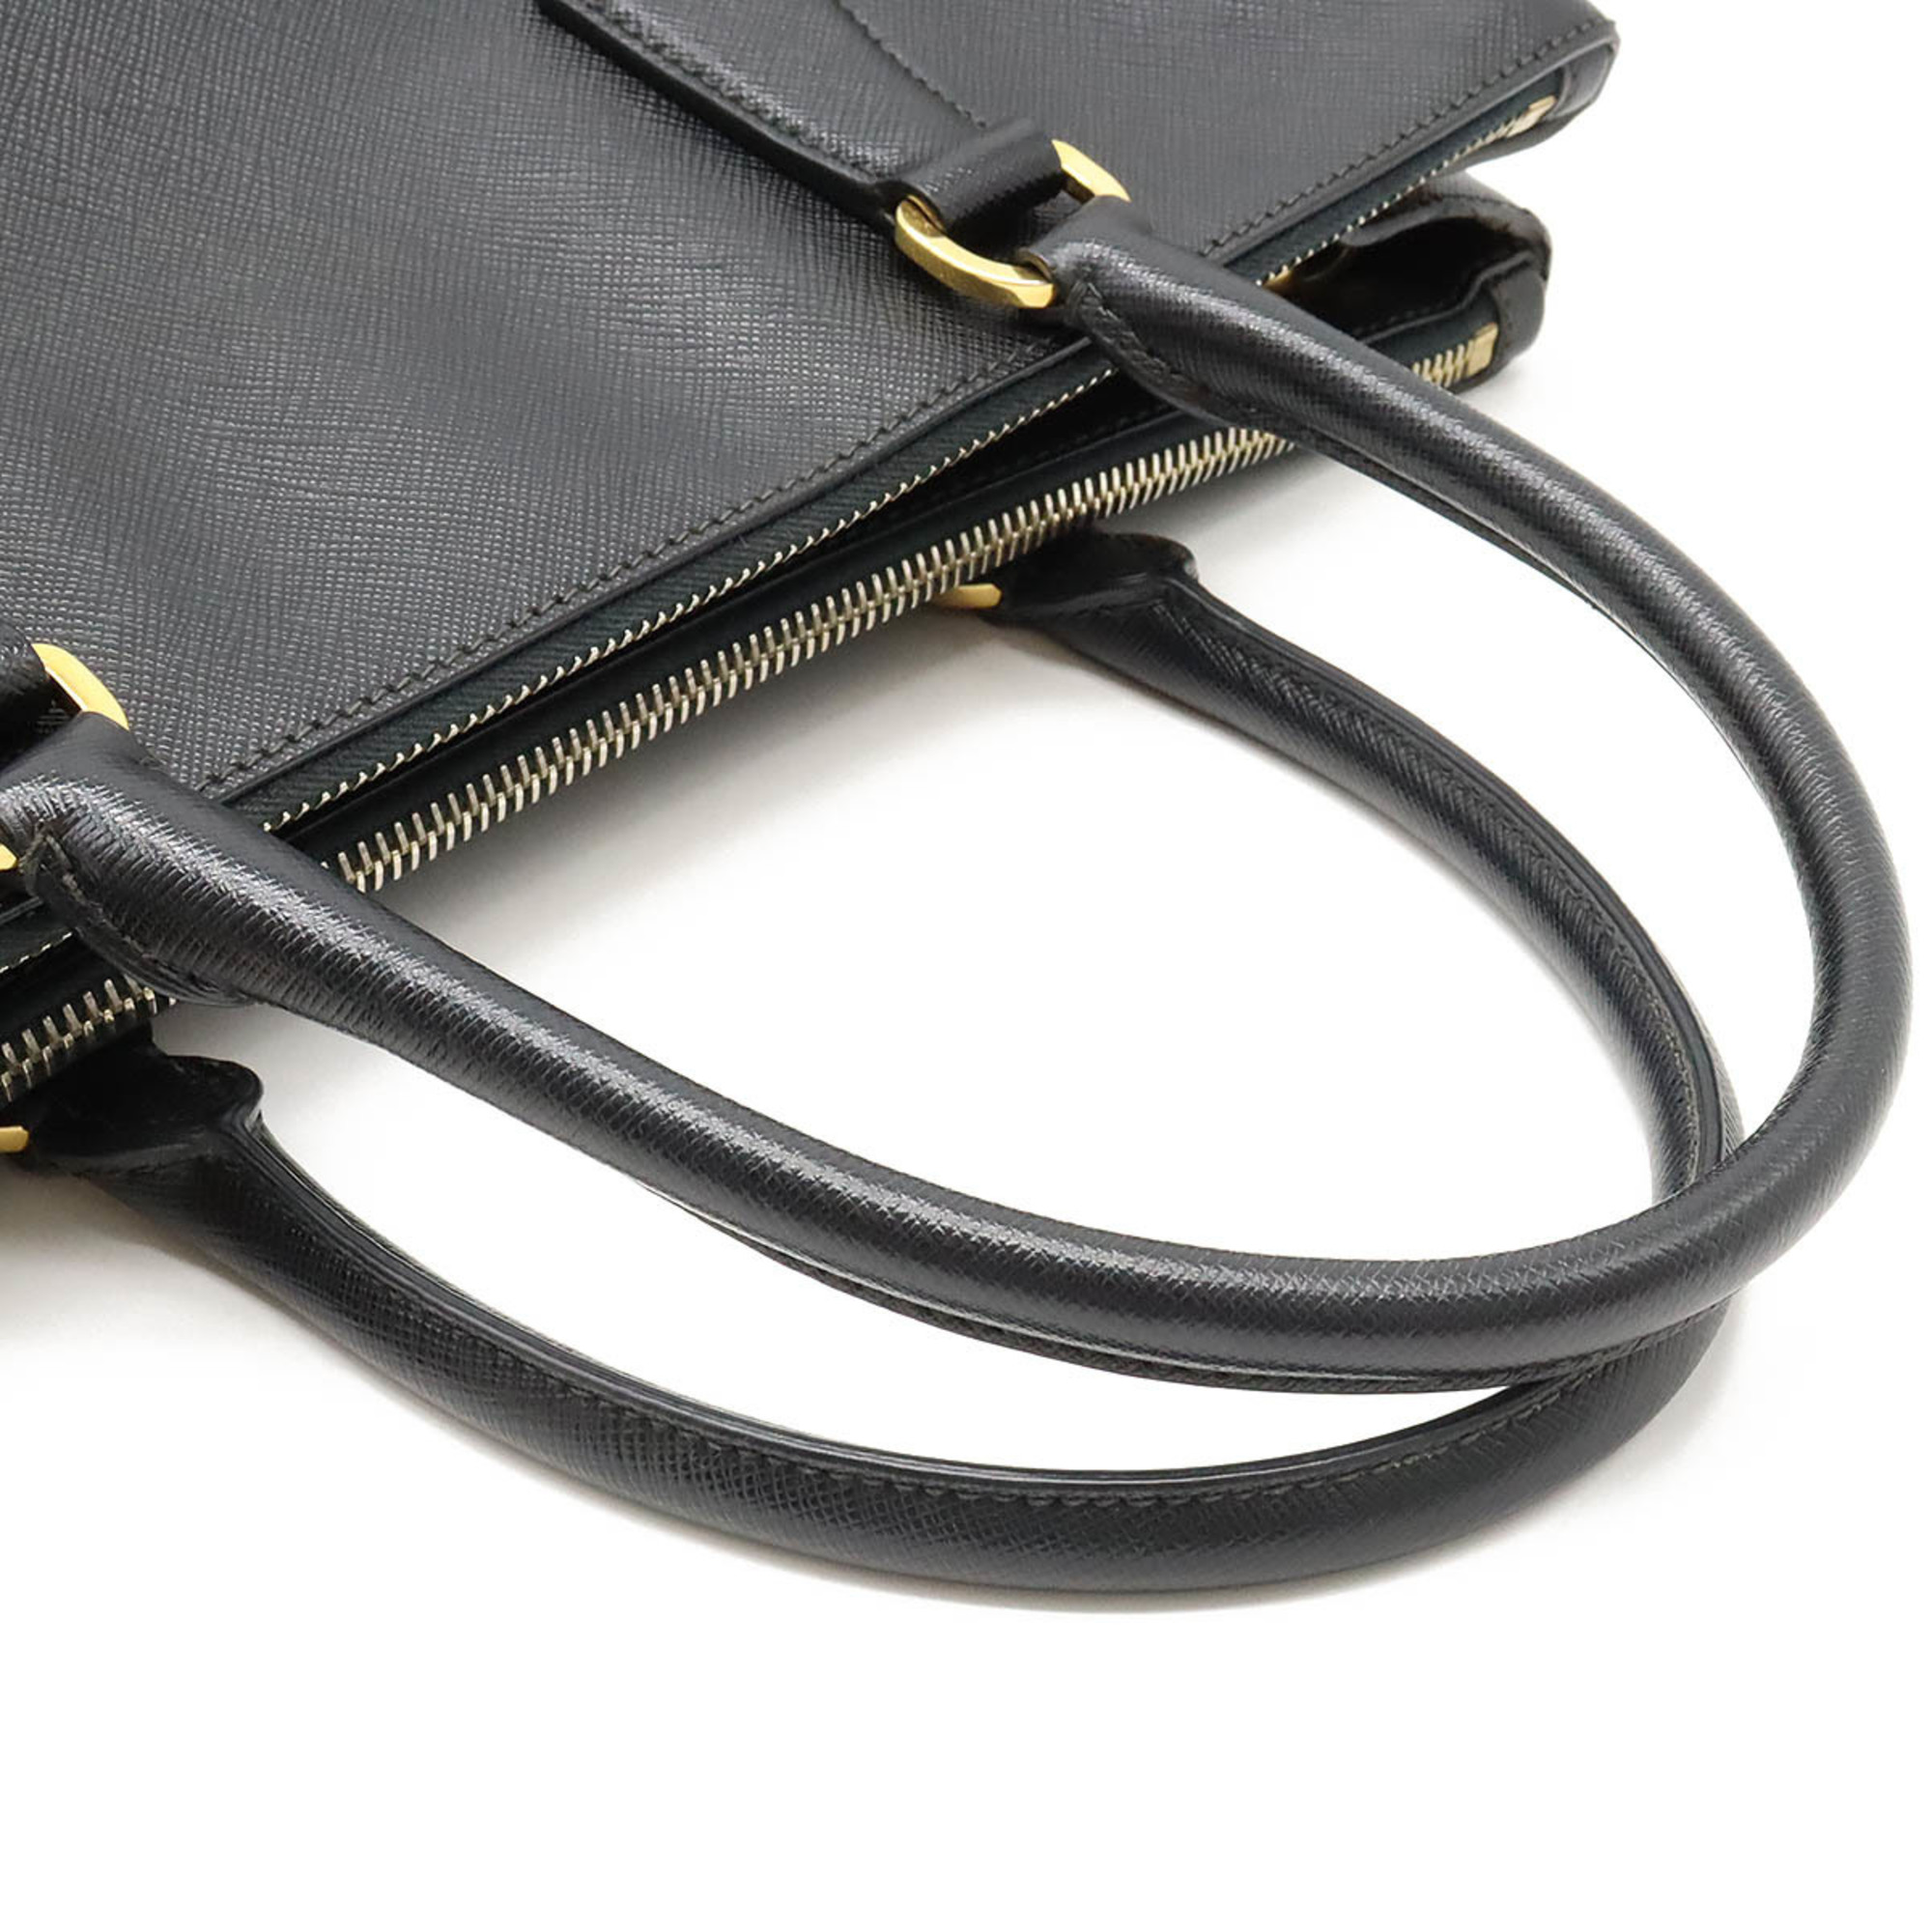 PRADA SAFFIANO LUX Saffiano Handbag Shoulder Bag Leather NERO Black BN2274